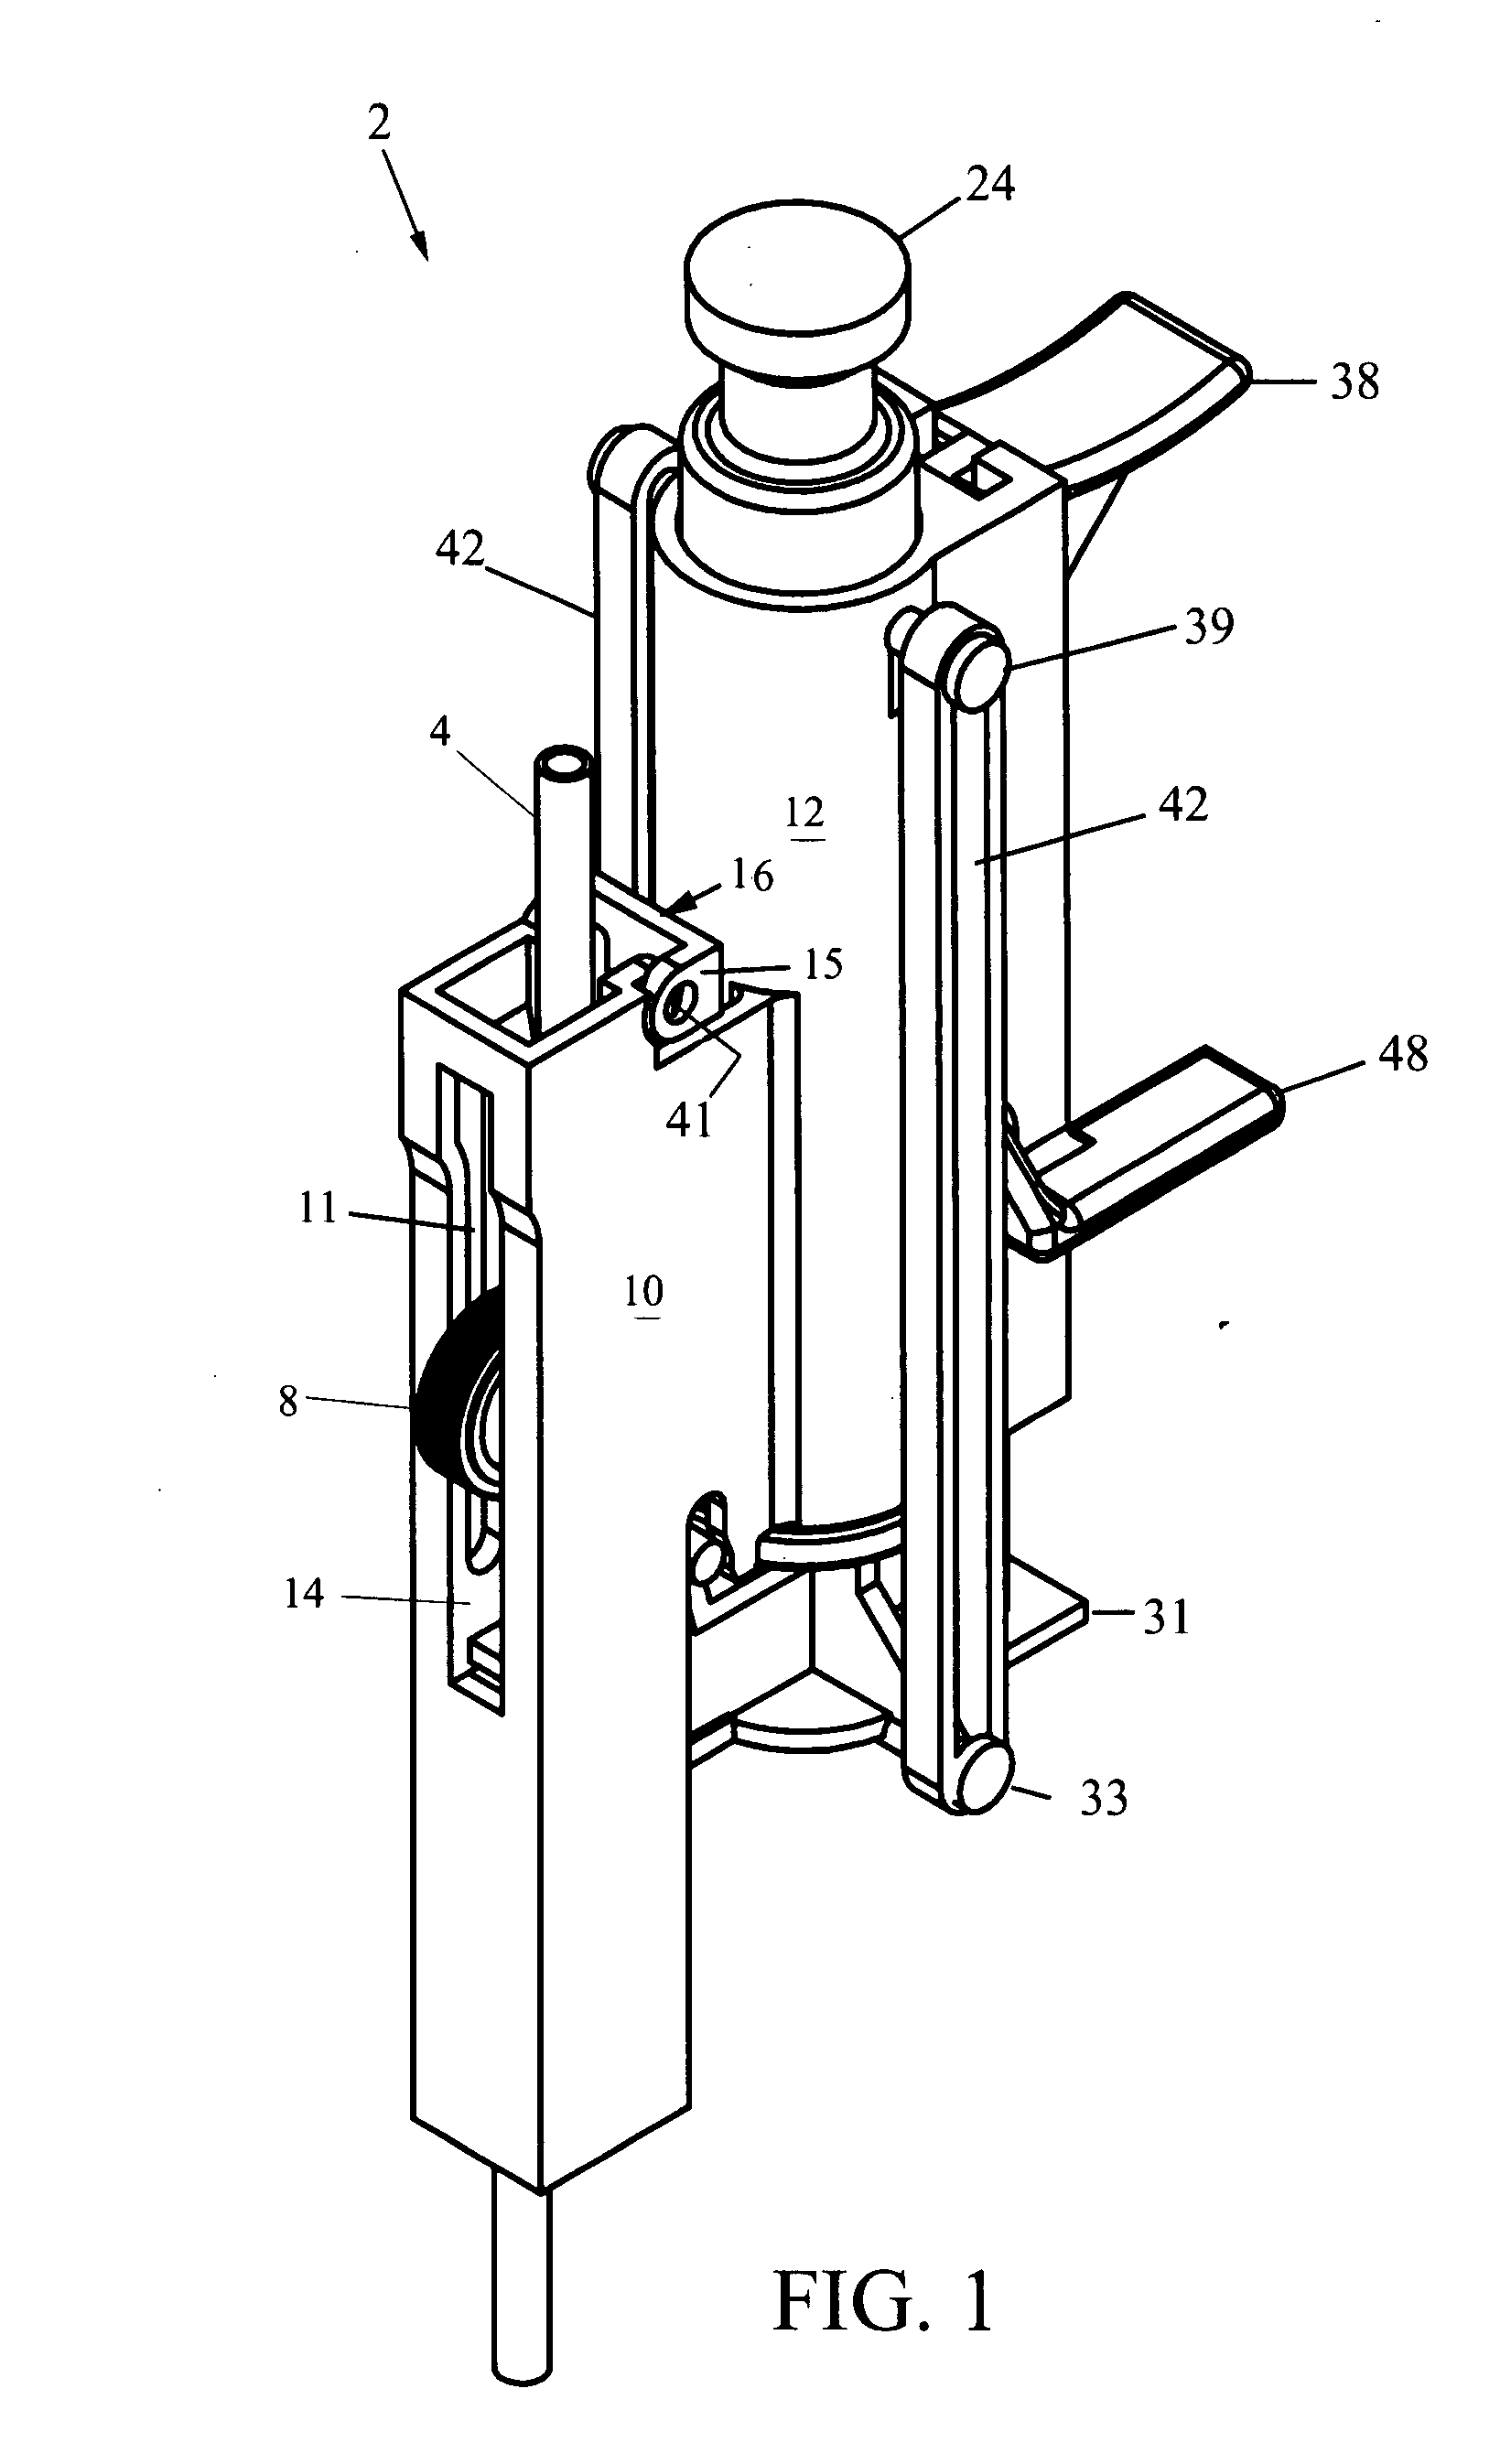 IV regulator with integral flushing mechanism